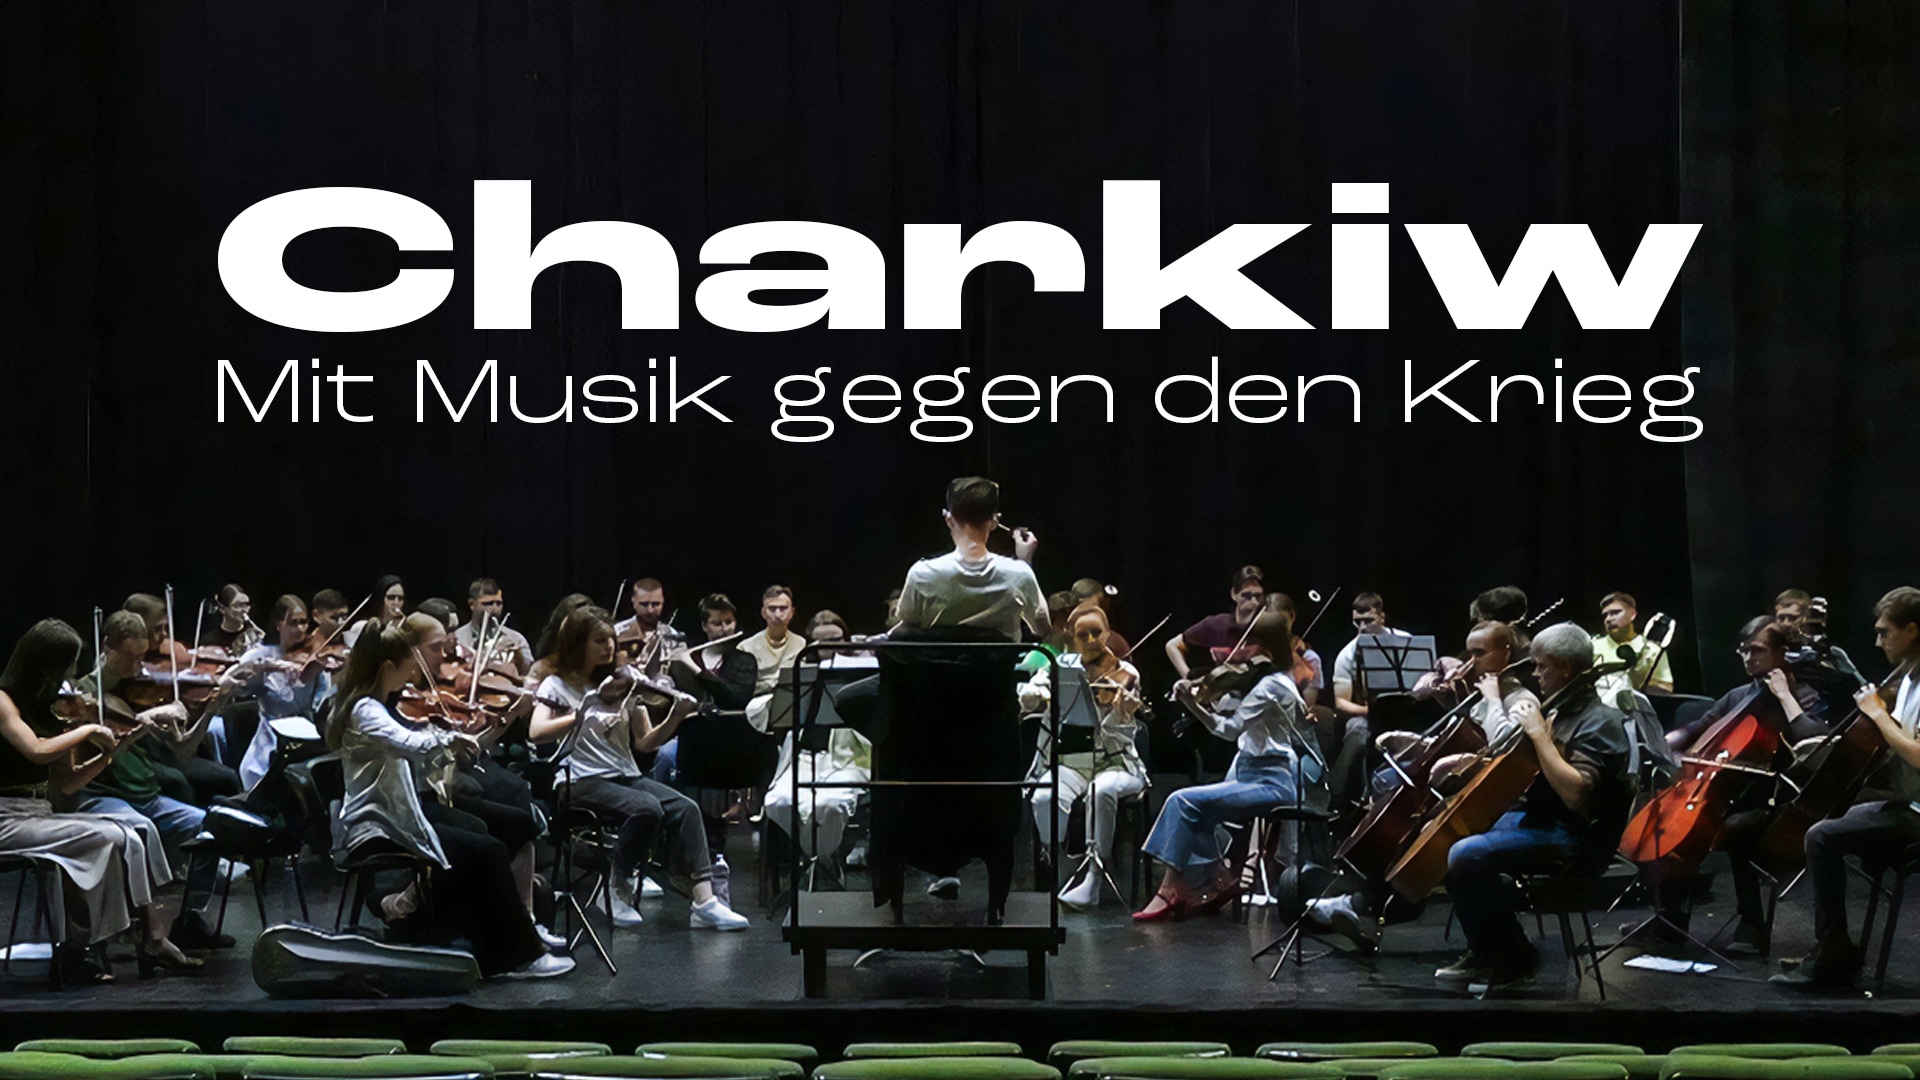 Charkiw – Mit Musik gegen den Krieg